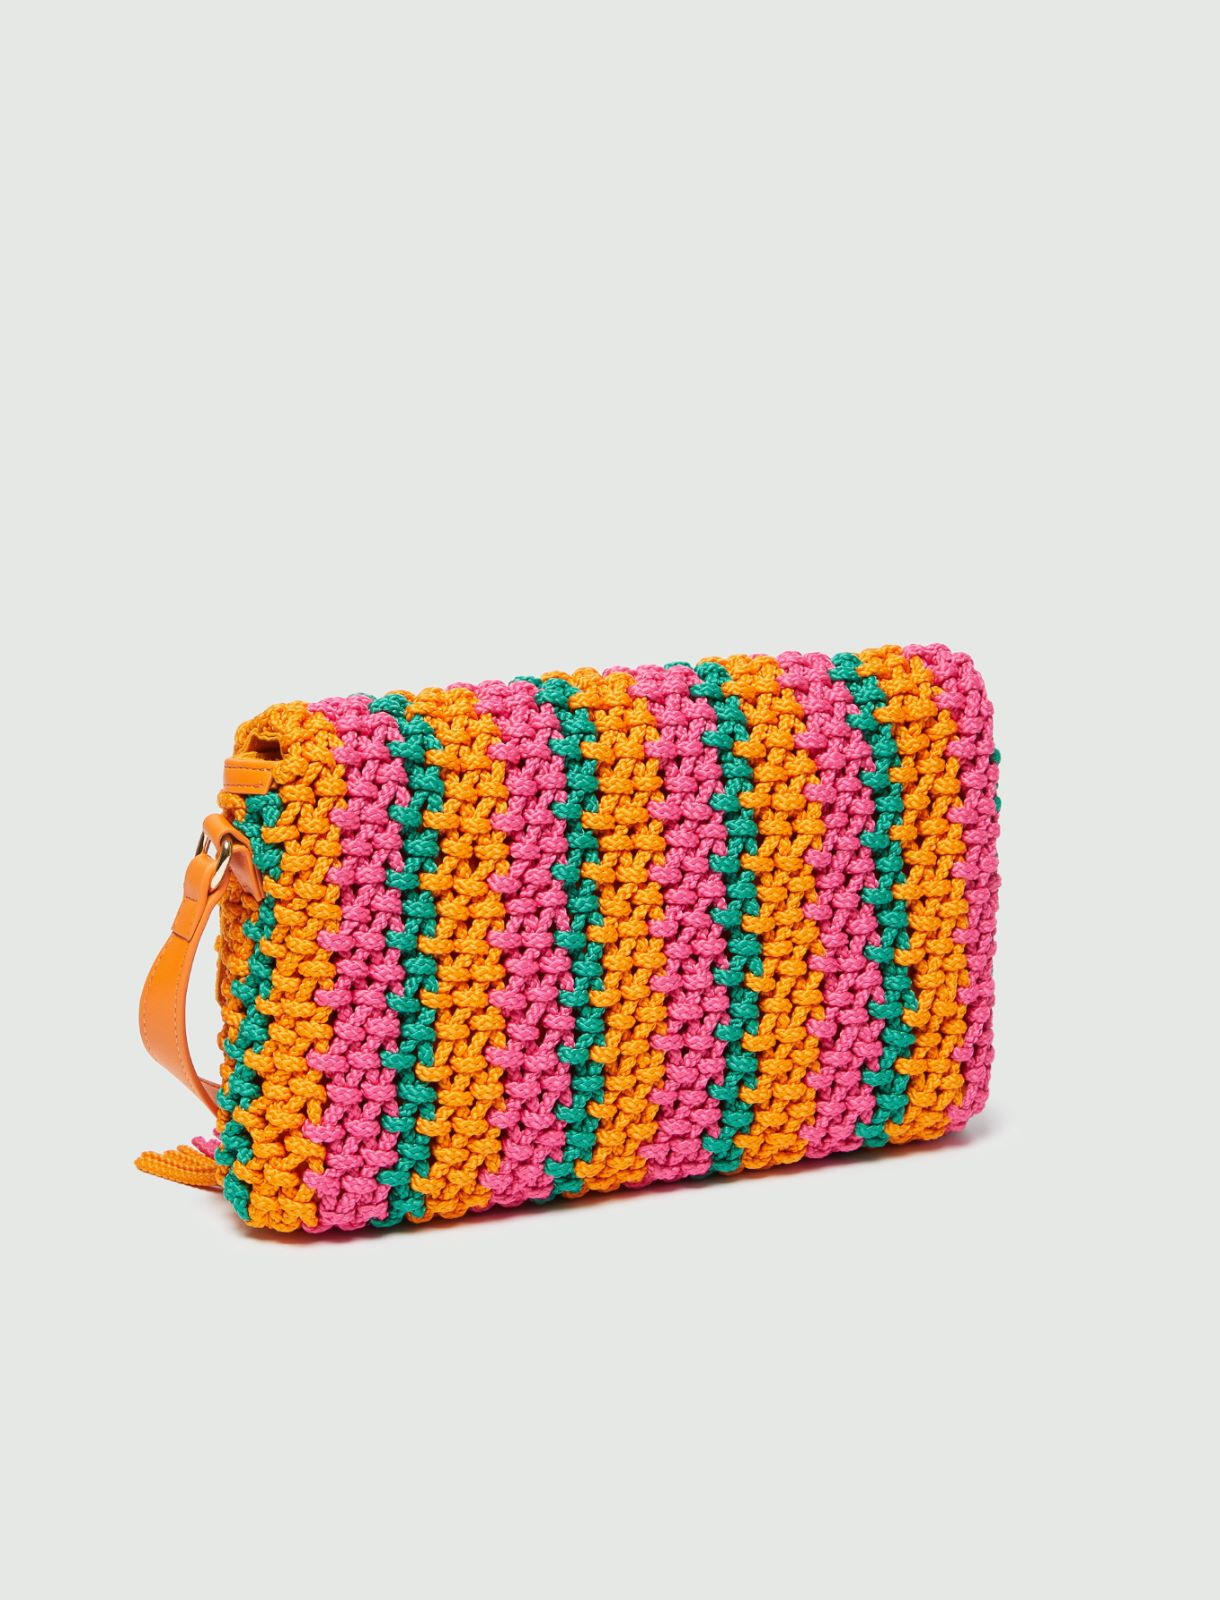 Crochet bag - Green - Marina Rinaldi - 2